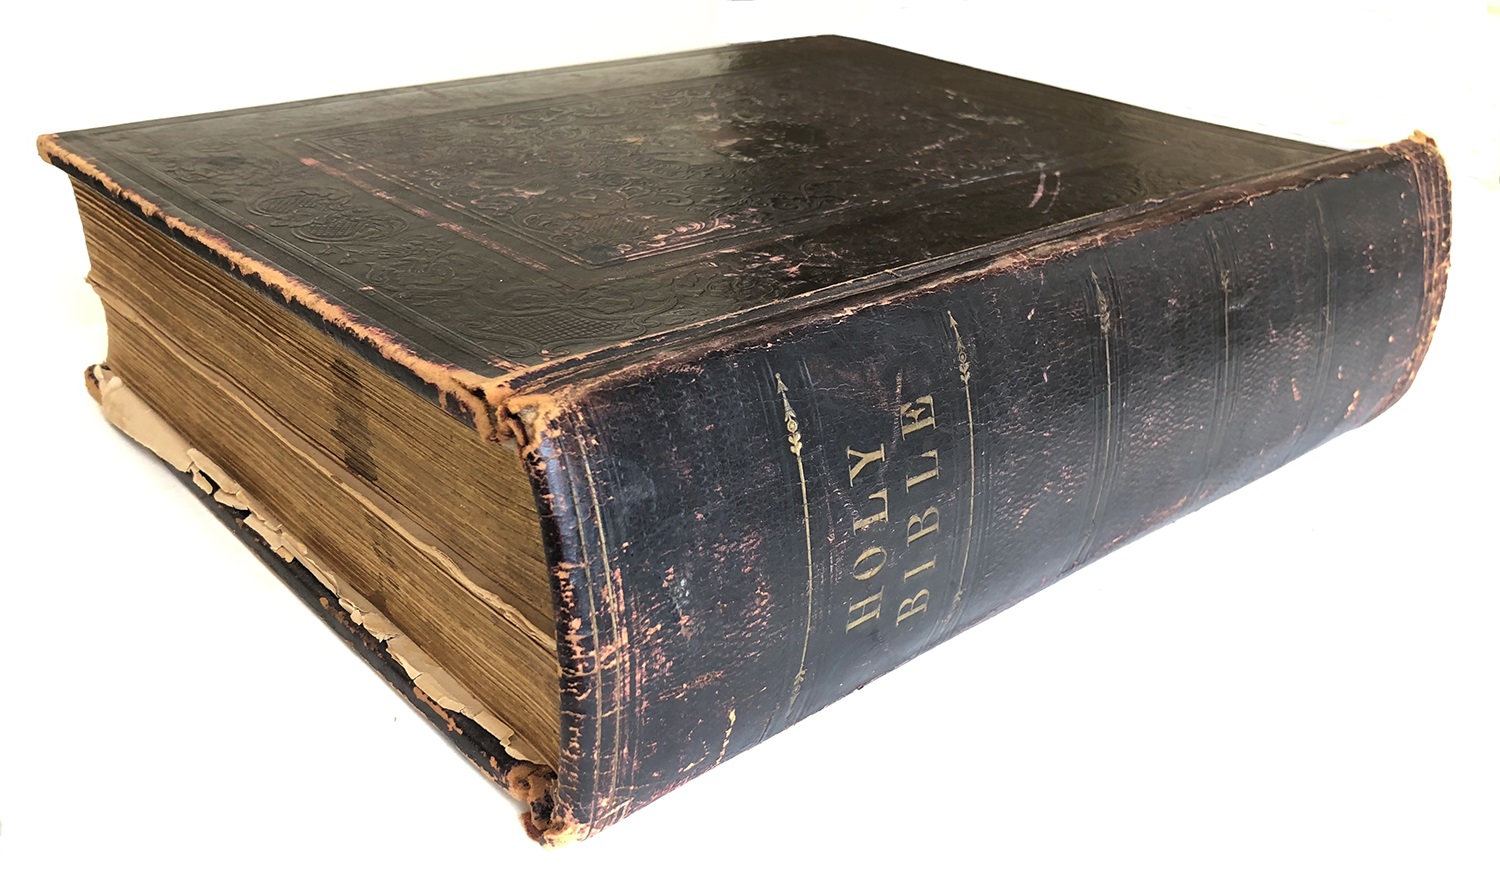 Read Introducing VA’s first artifact – Dayton Bible